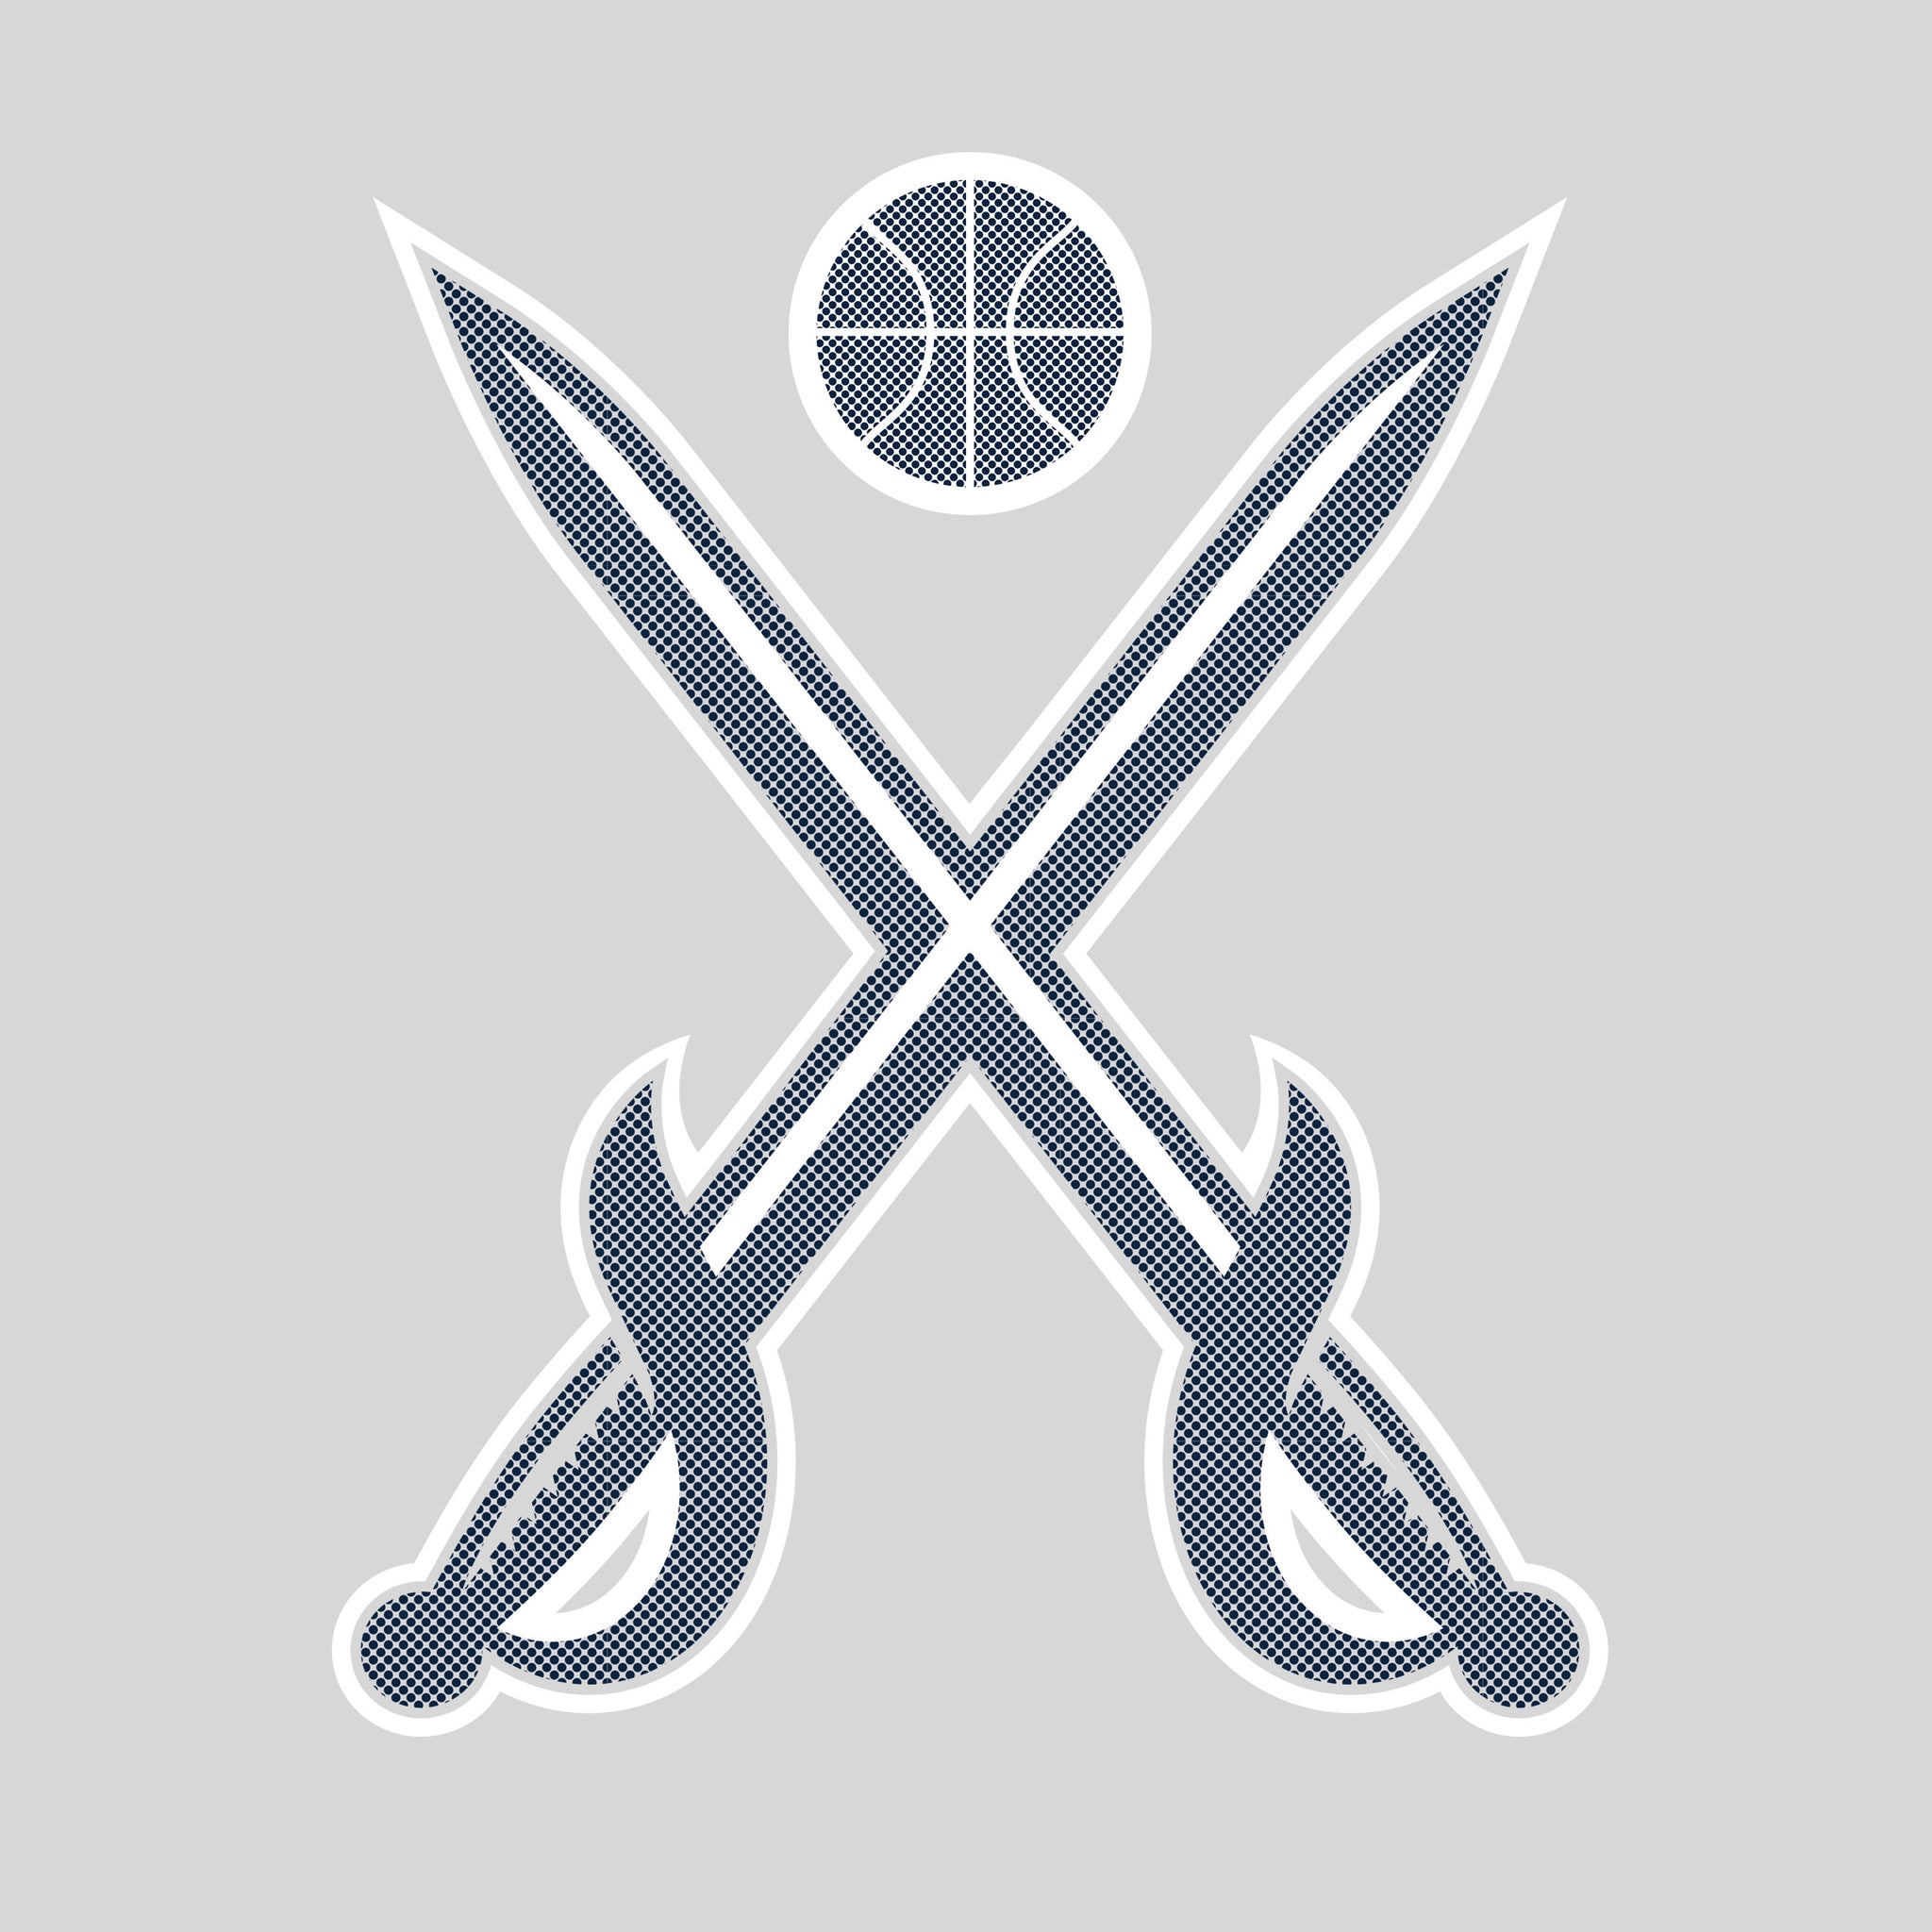 Xavier Basketball - Swords